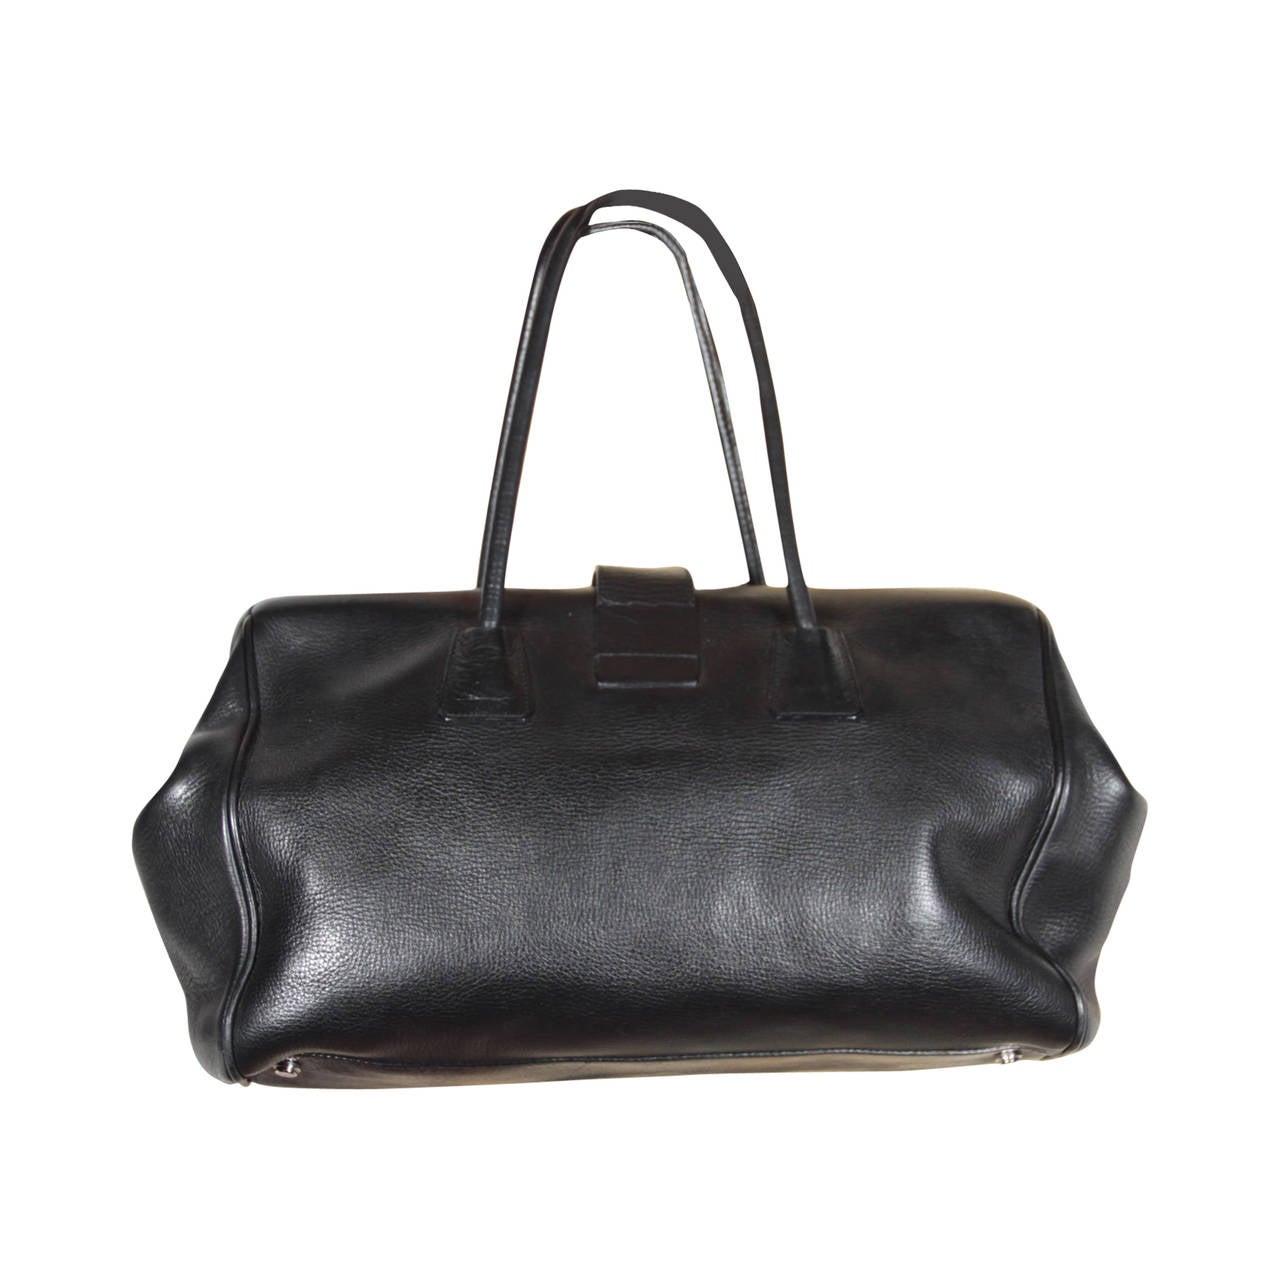 PRADA Authentic Italian Black Leather DOCTOR BAG Handbag SATCHEL ...  